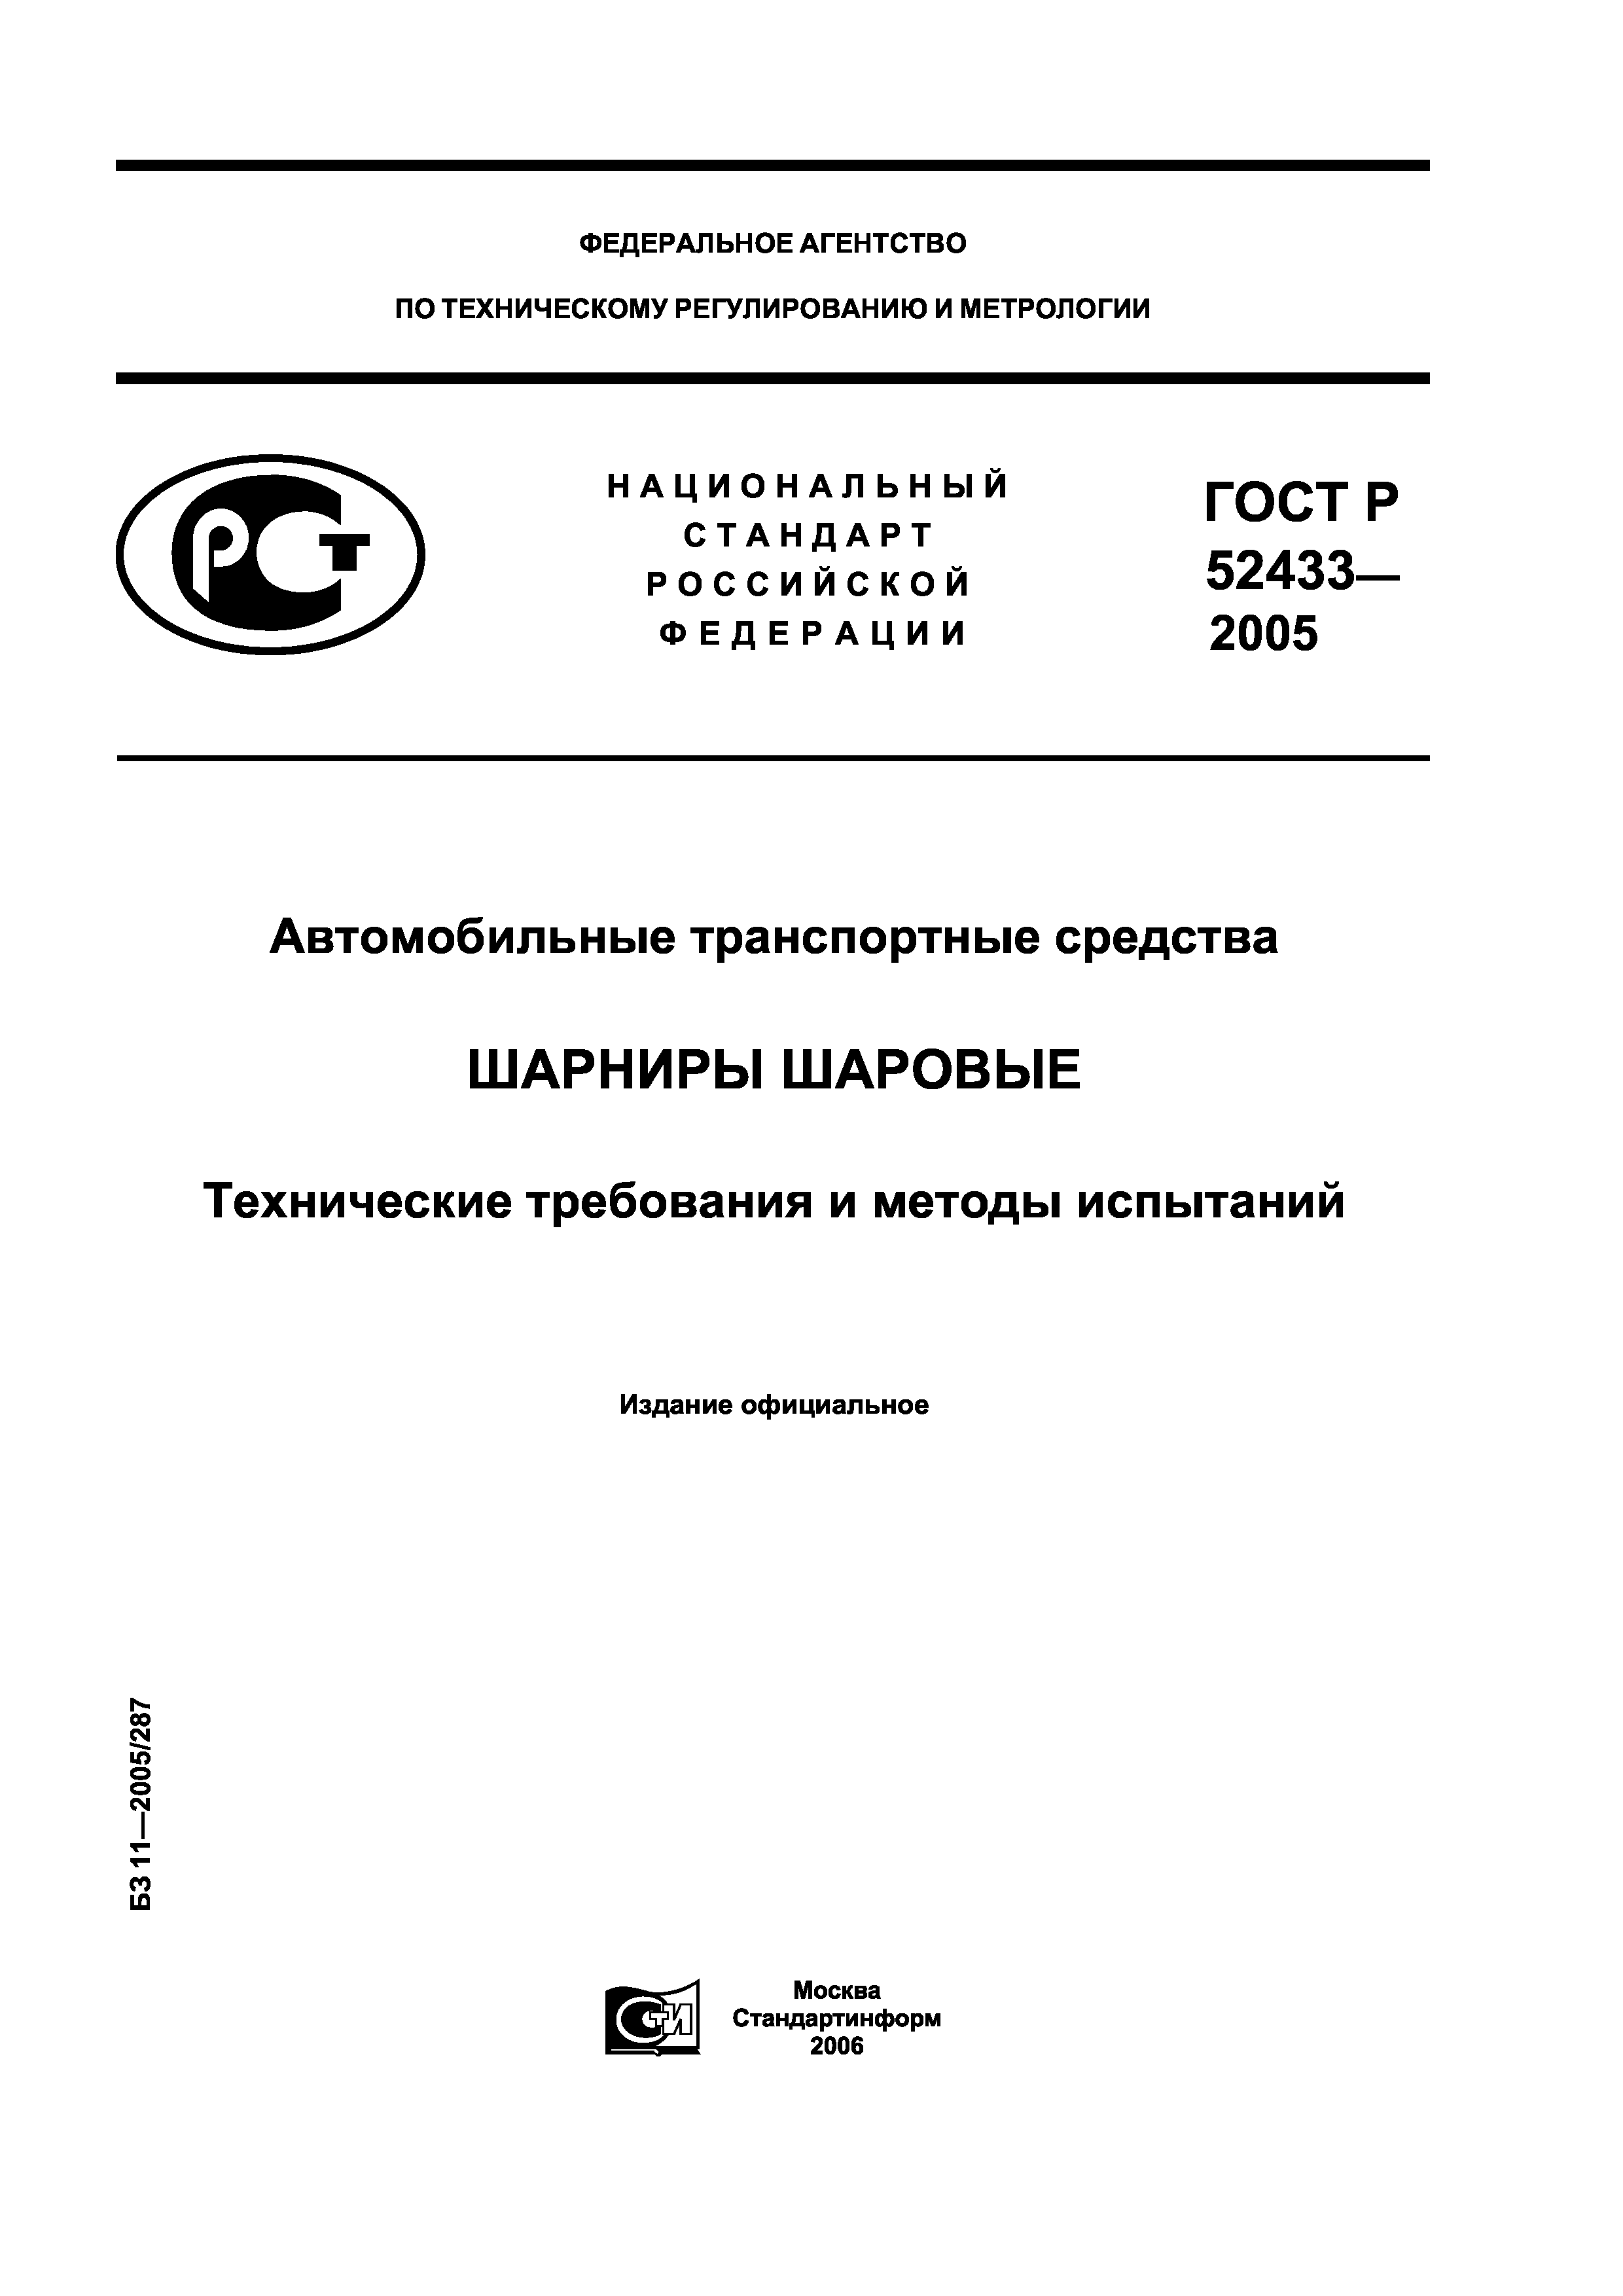 ГОСТ Р 52433-2005